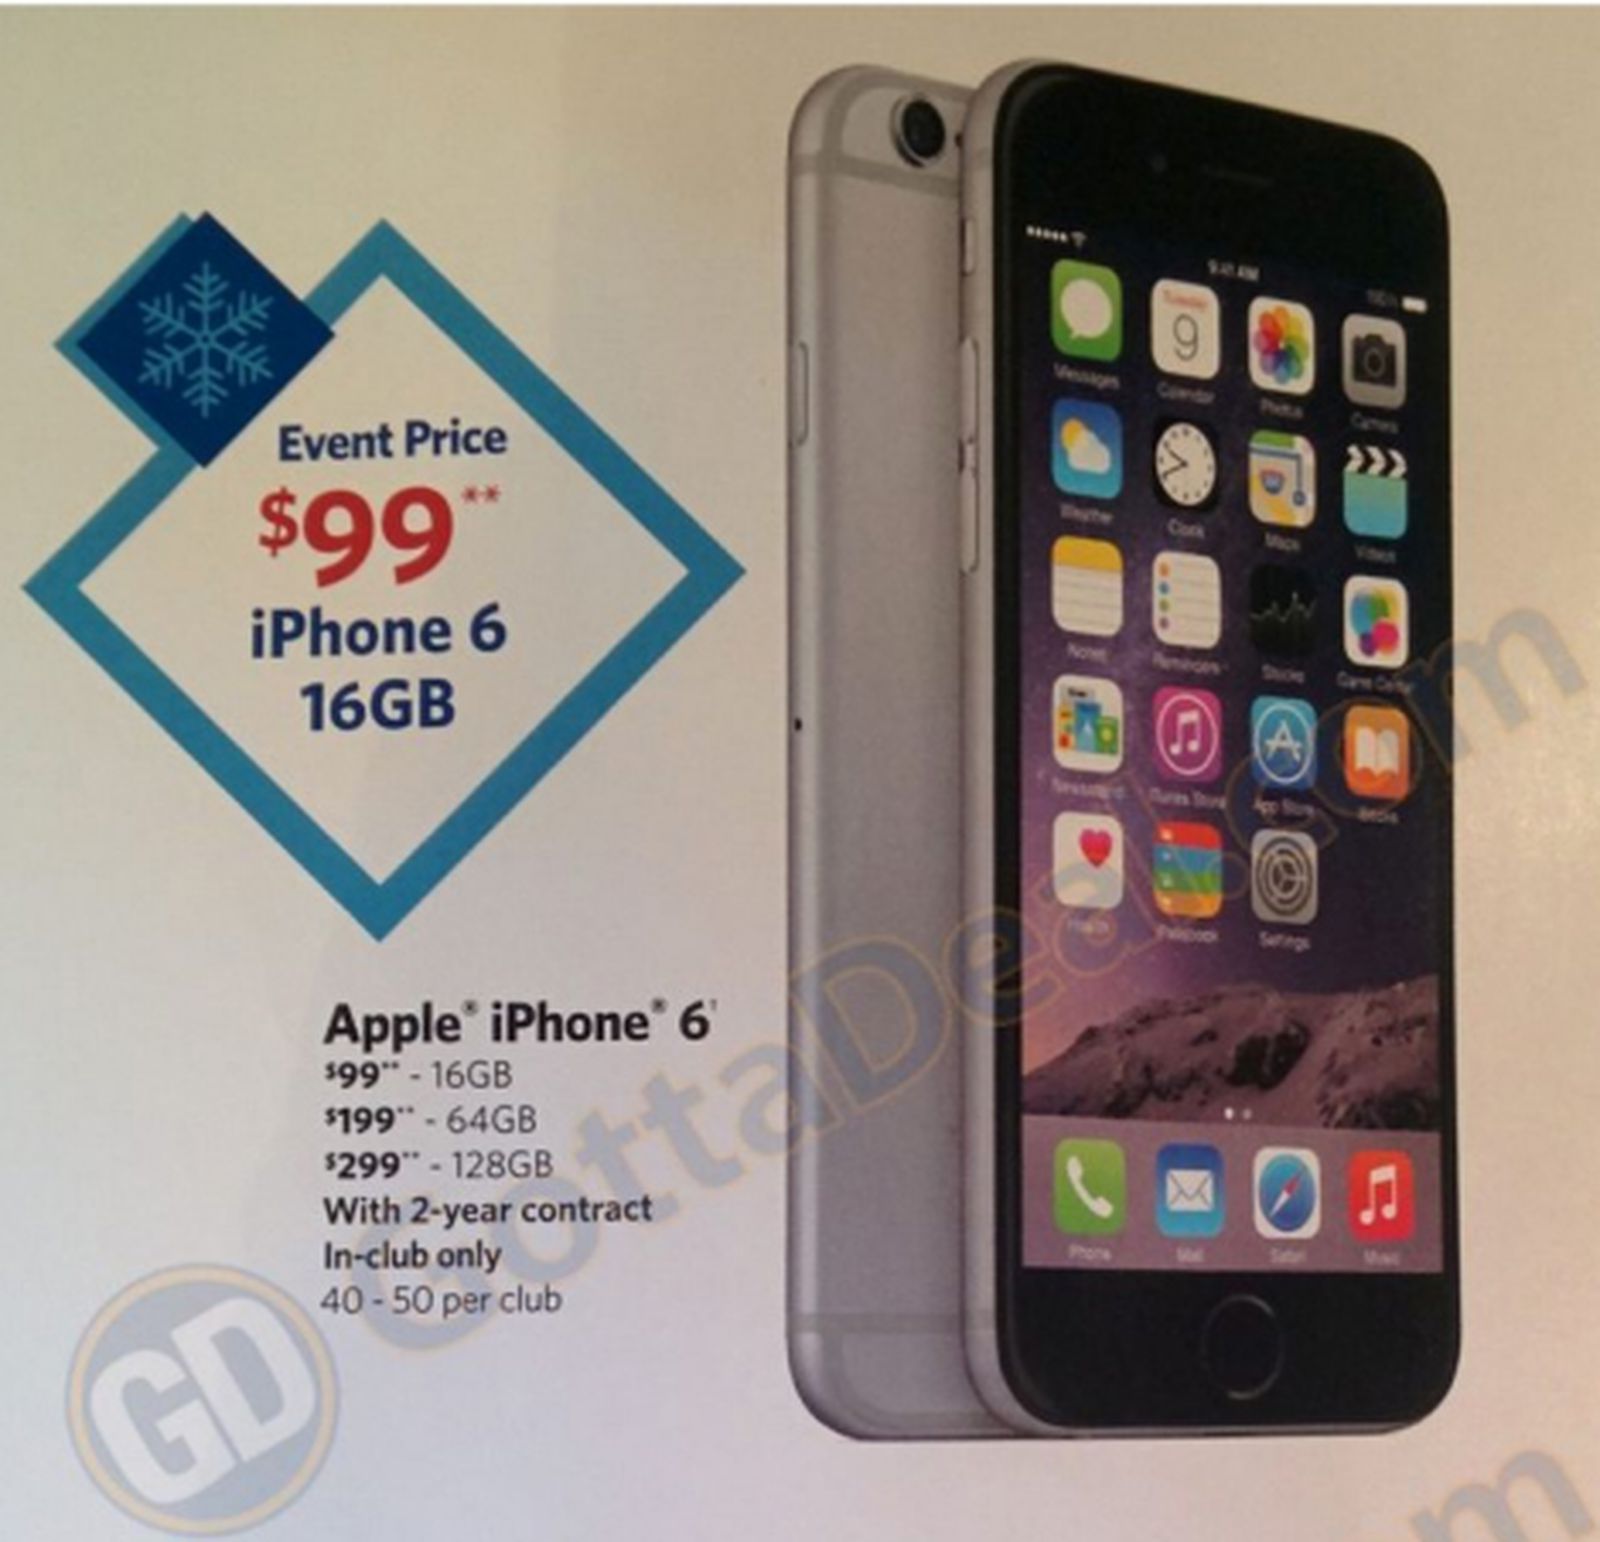 Sam's Club Selling iPhone 6 as Low as $99 Starting November 15 - MacRumors